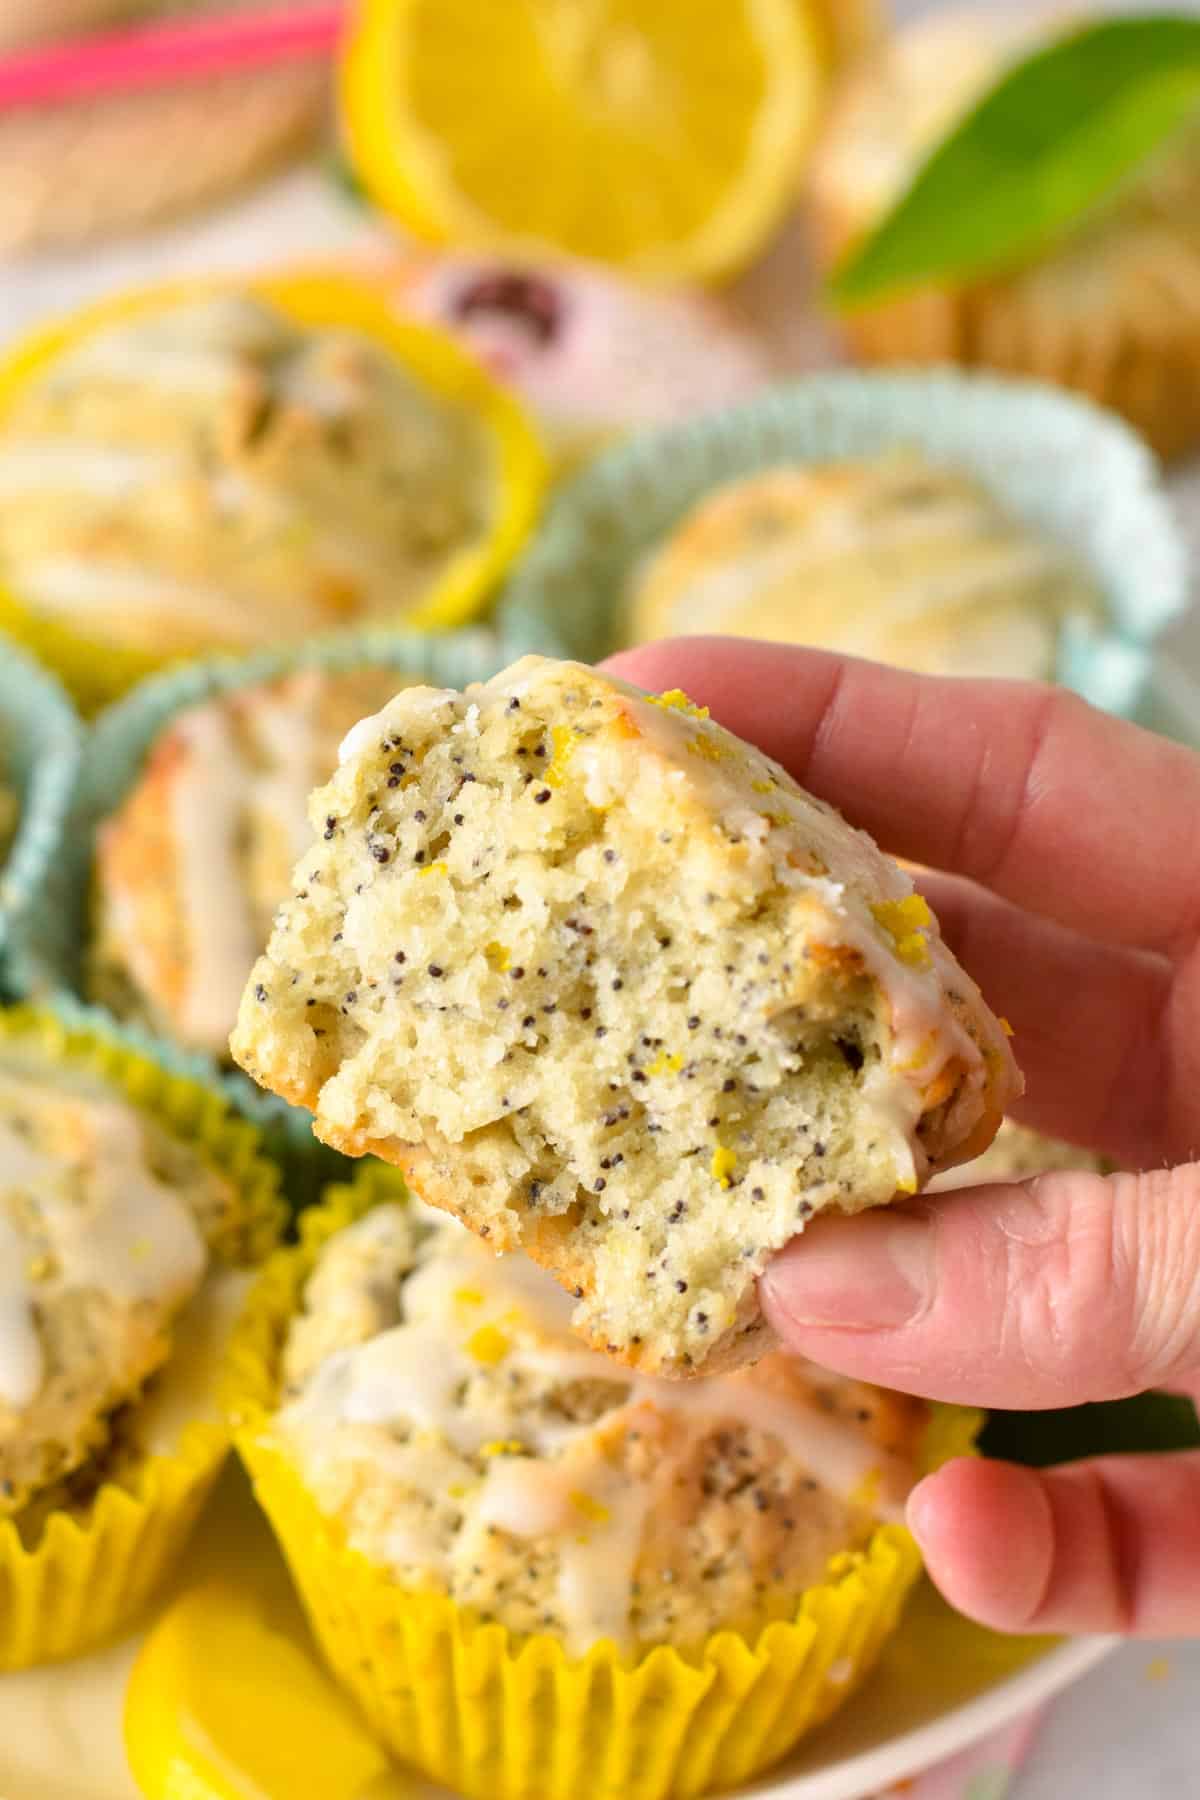 These Vegan Lemon Poppyseed Muffins are light fluffy breakfast muffins with bursting lemon flavors with a sweet tangy lemon glaze.